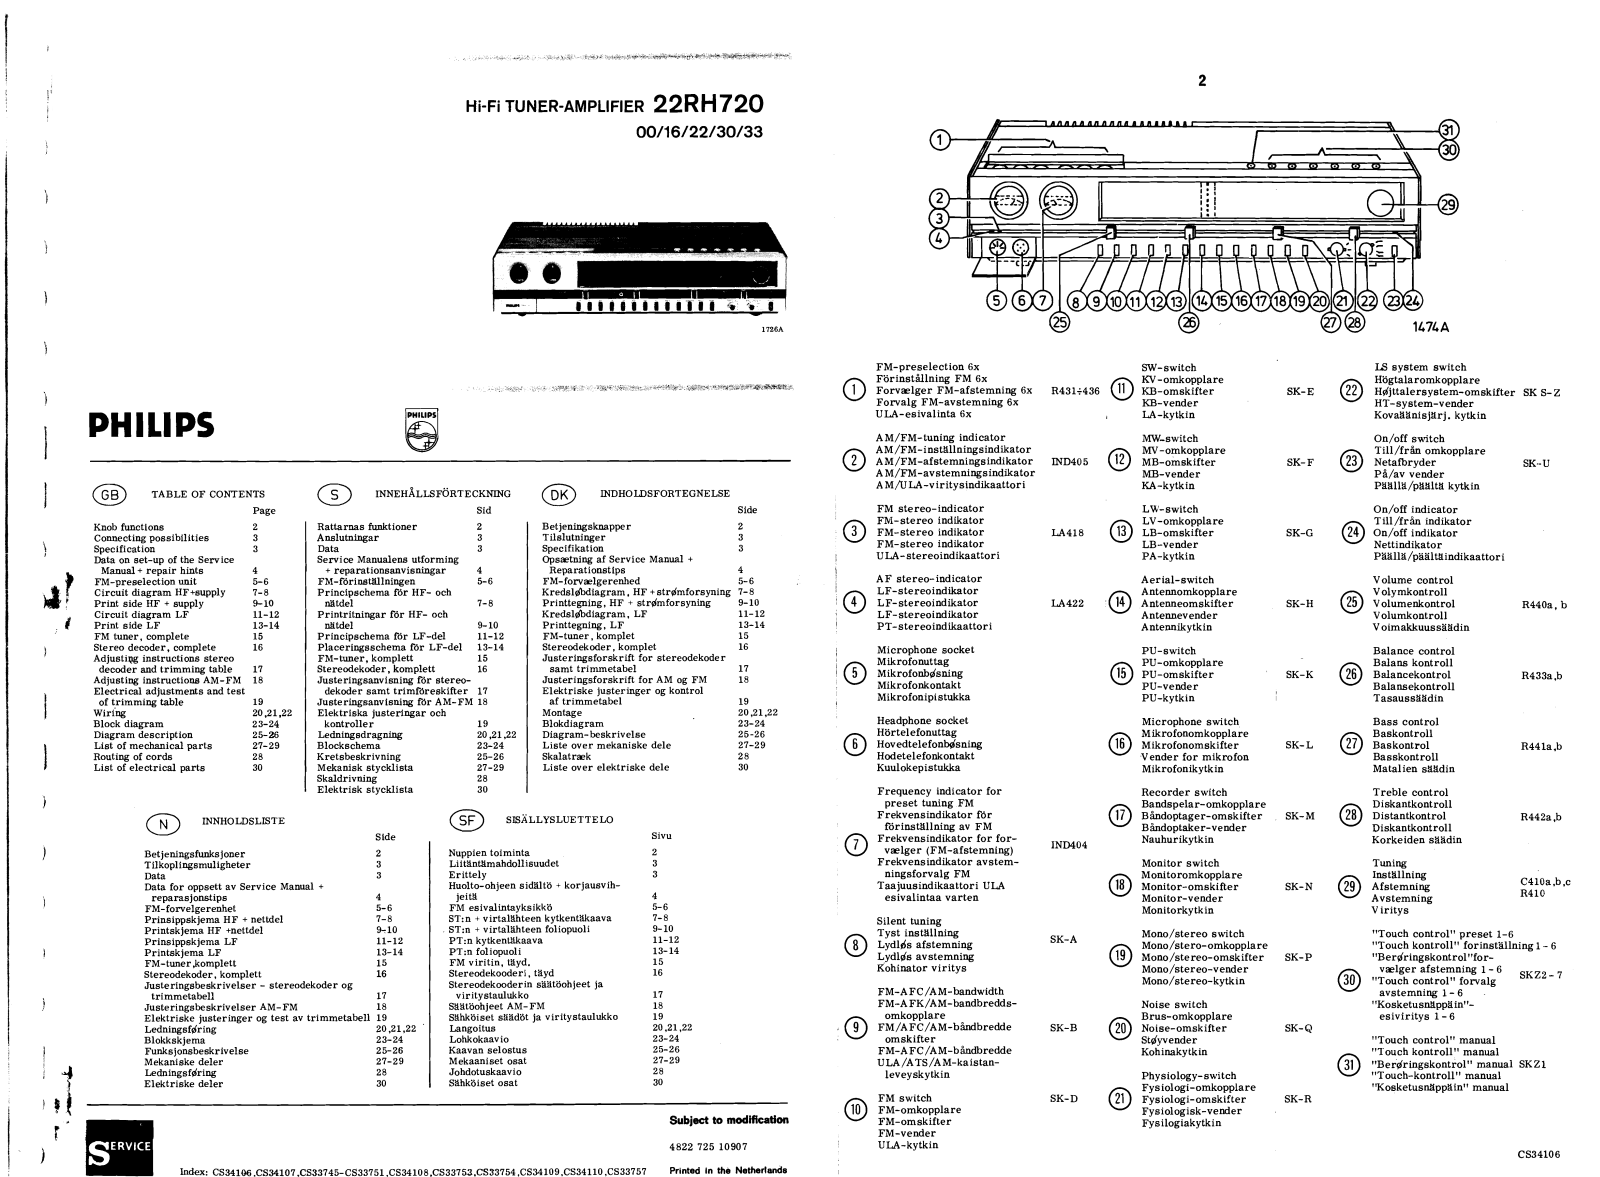 Philips 22-RH-720, RA-5720 Service Manual